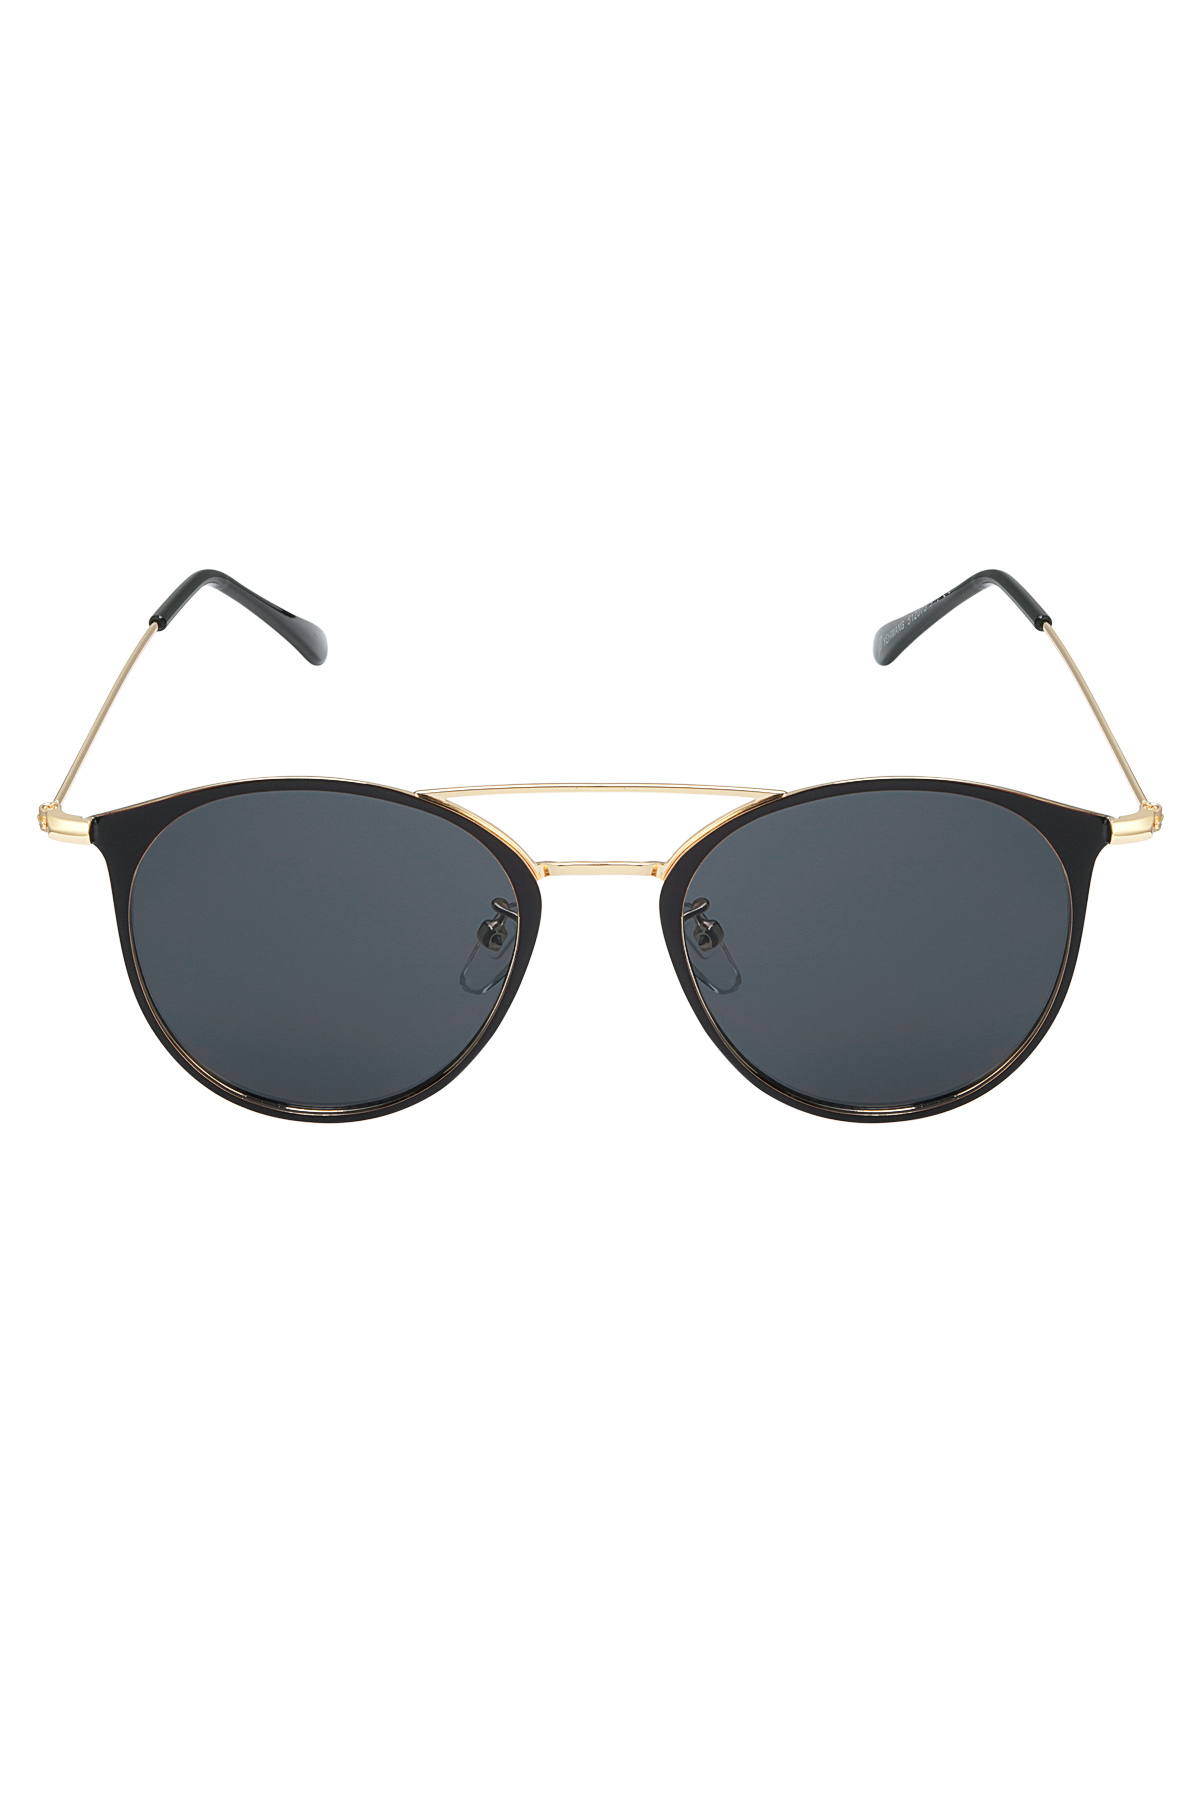 Sunglasses summer vibe - black/gold Picture5